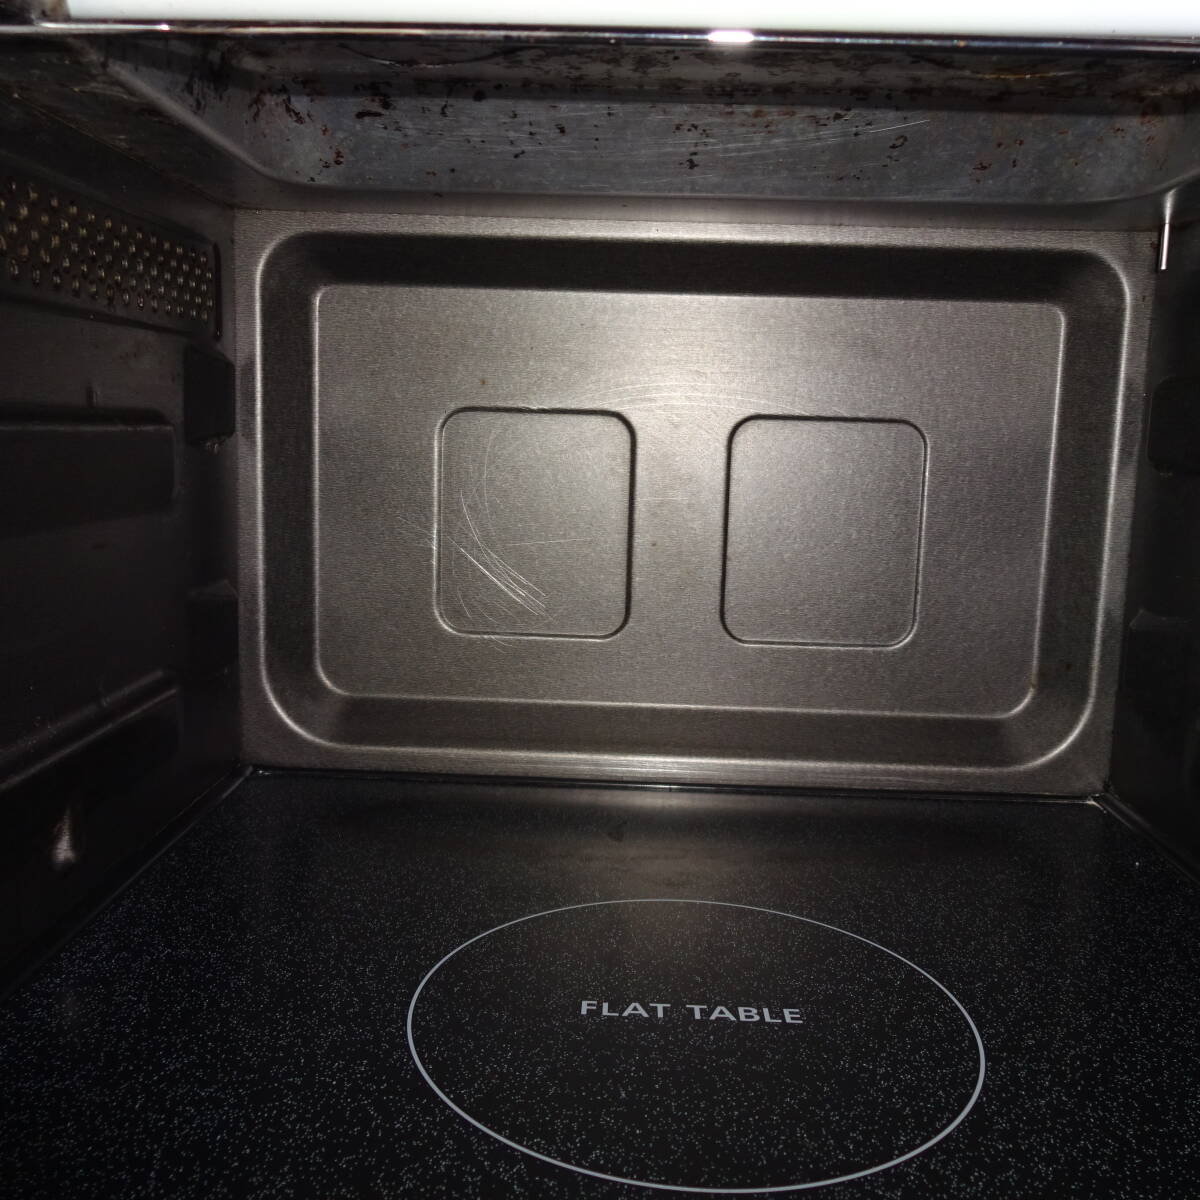  Panasonic microwave oven NE-FS300-W( white )2020 year made 